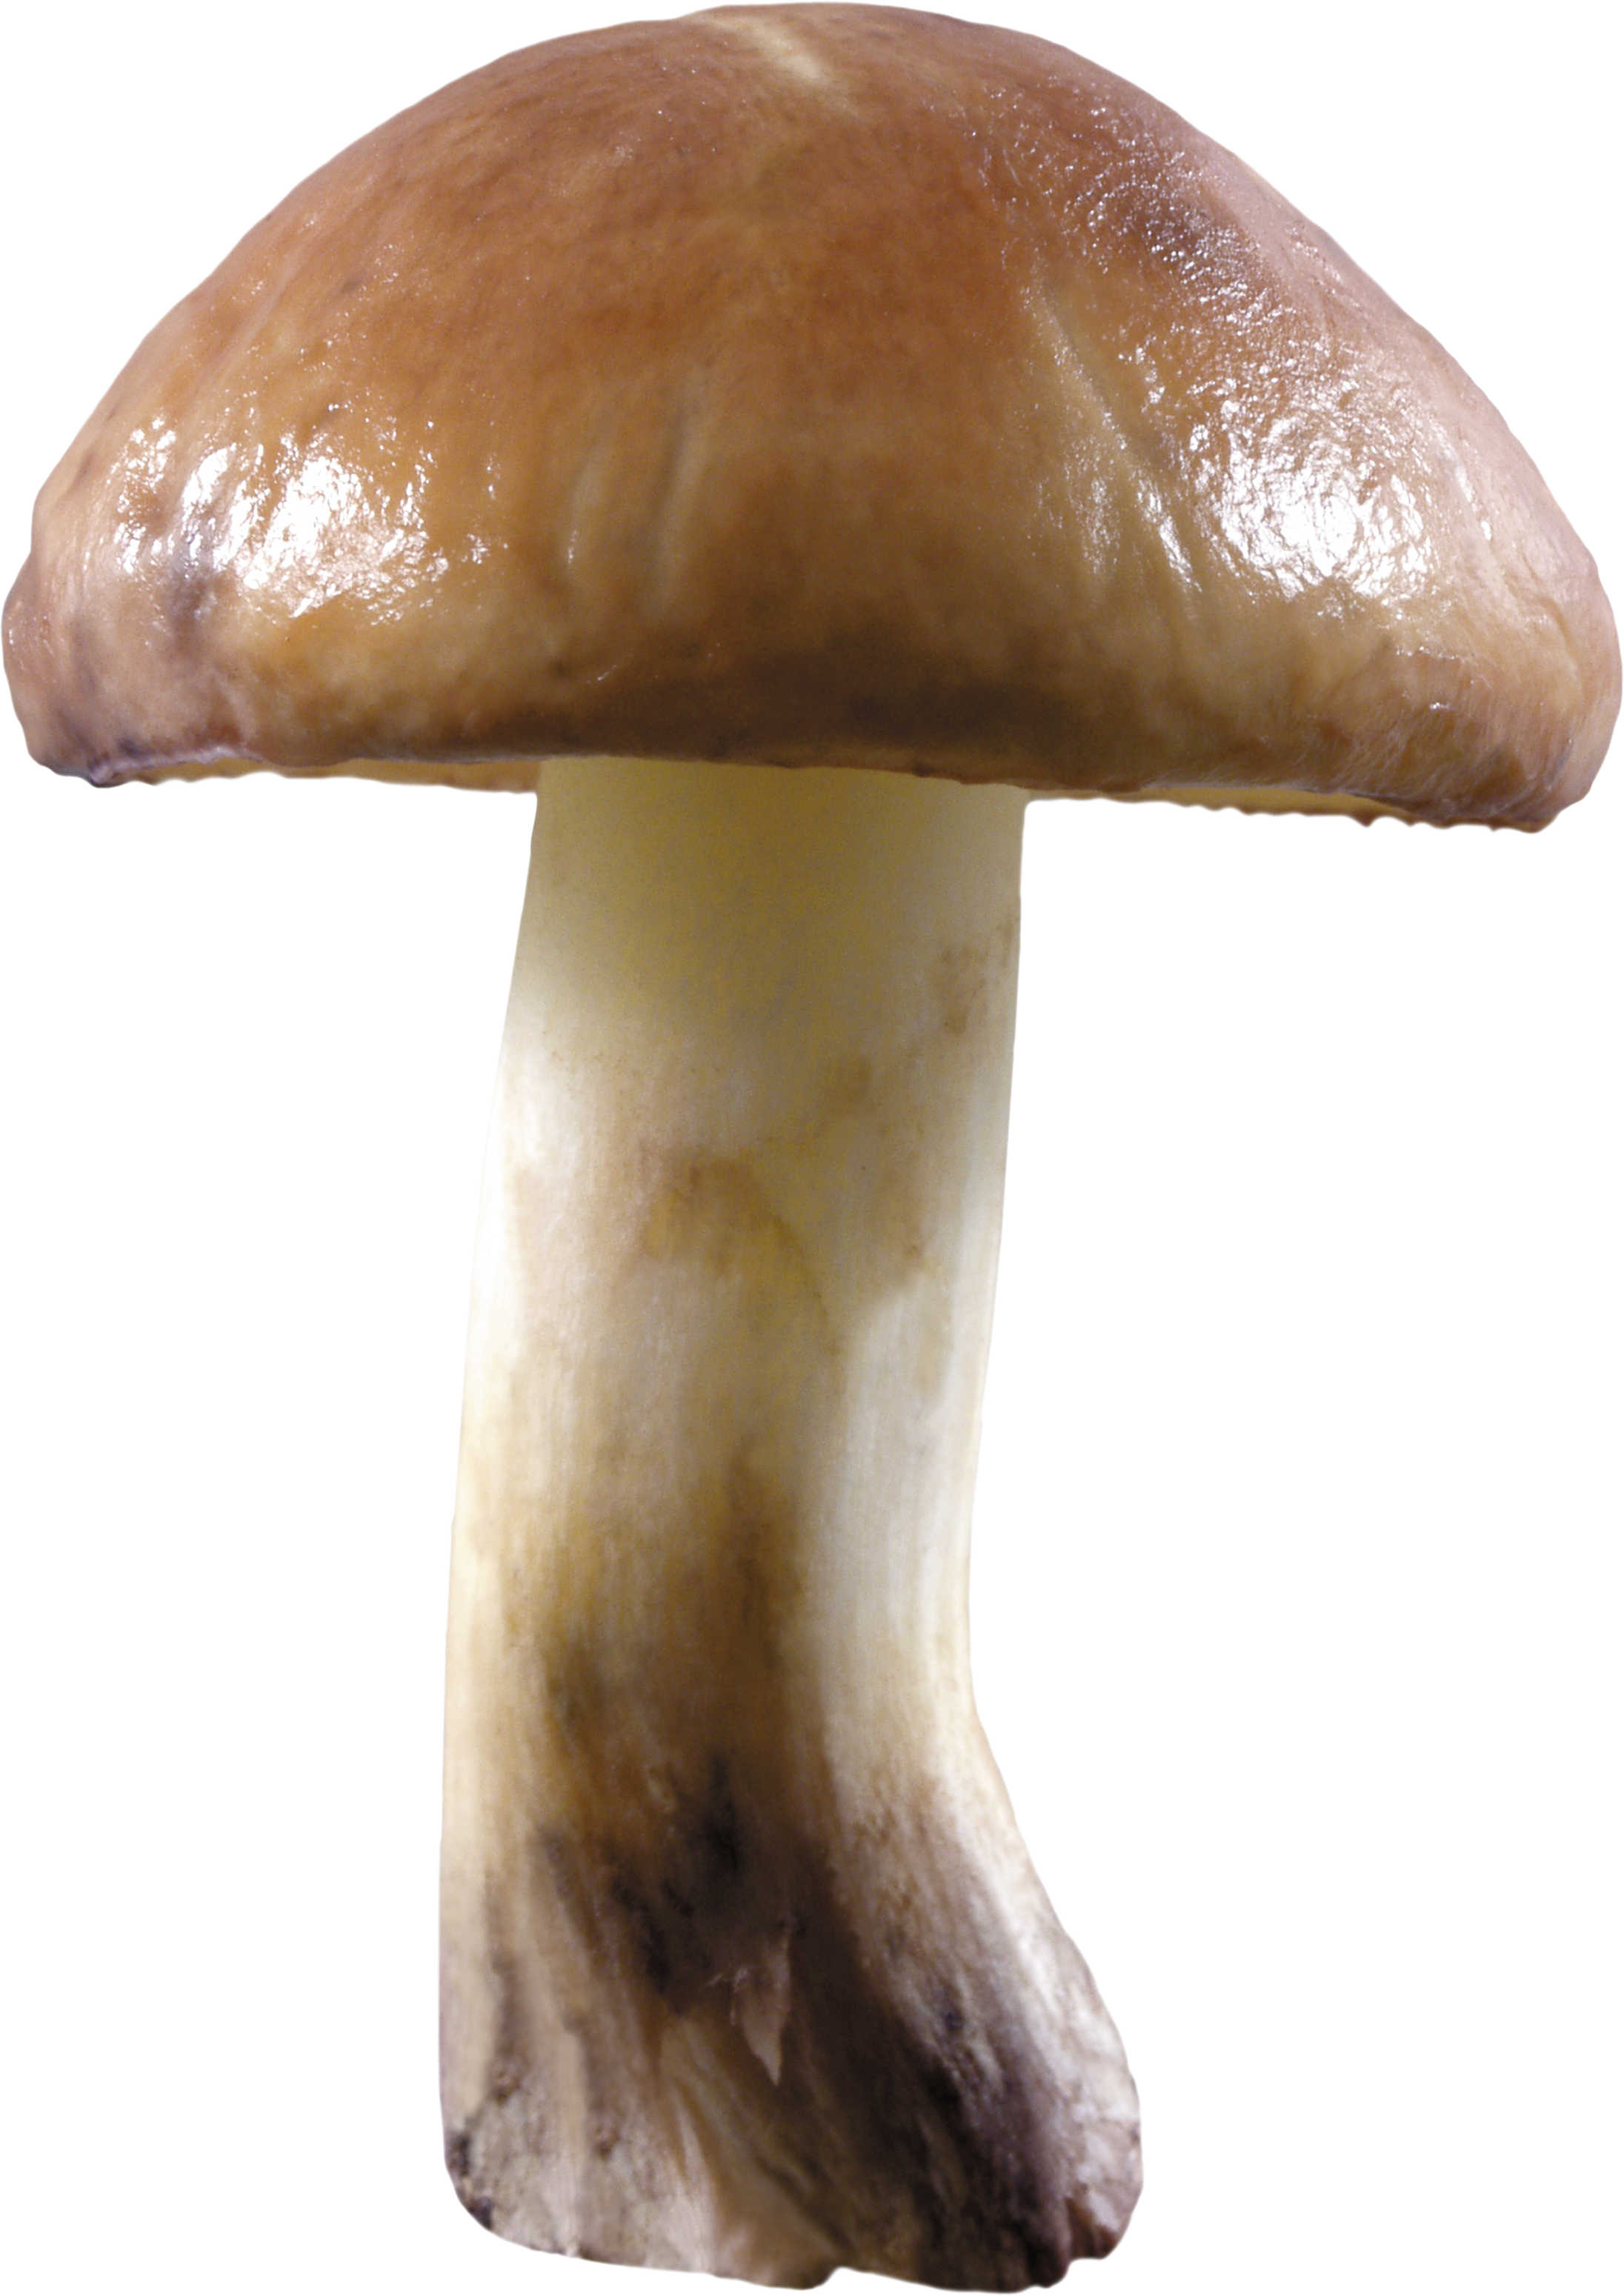 Mushroom PNG HD - 128864